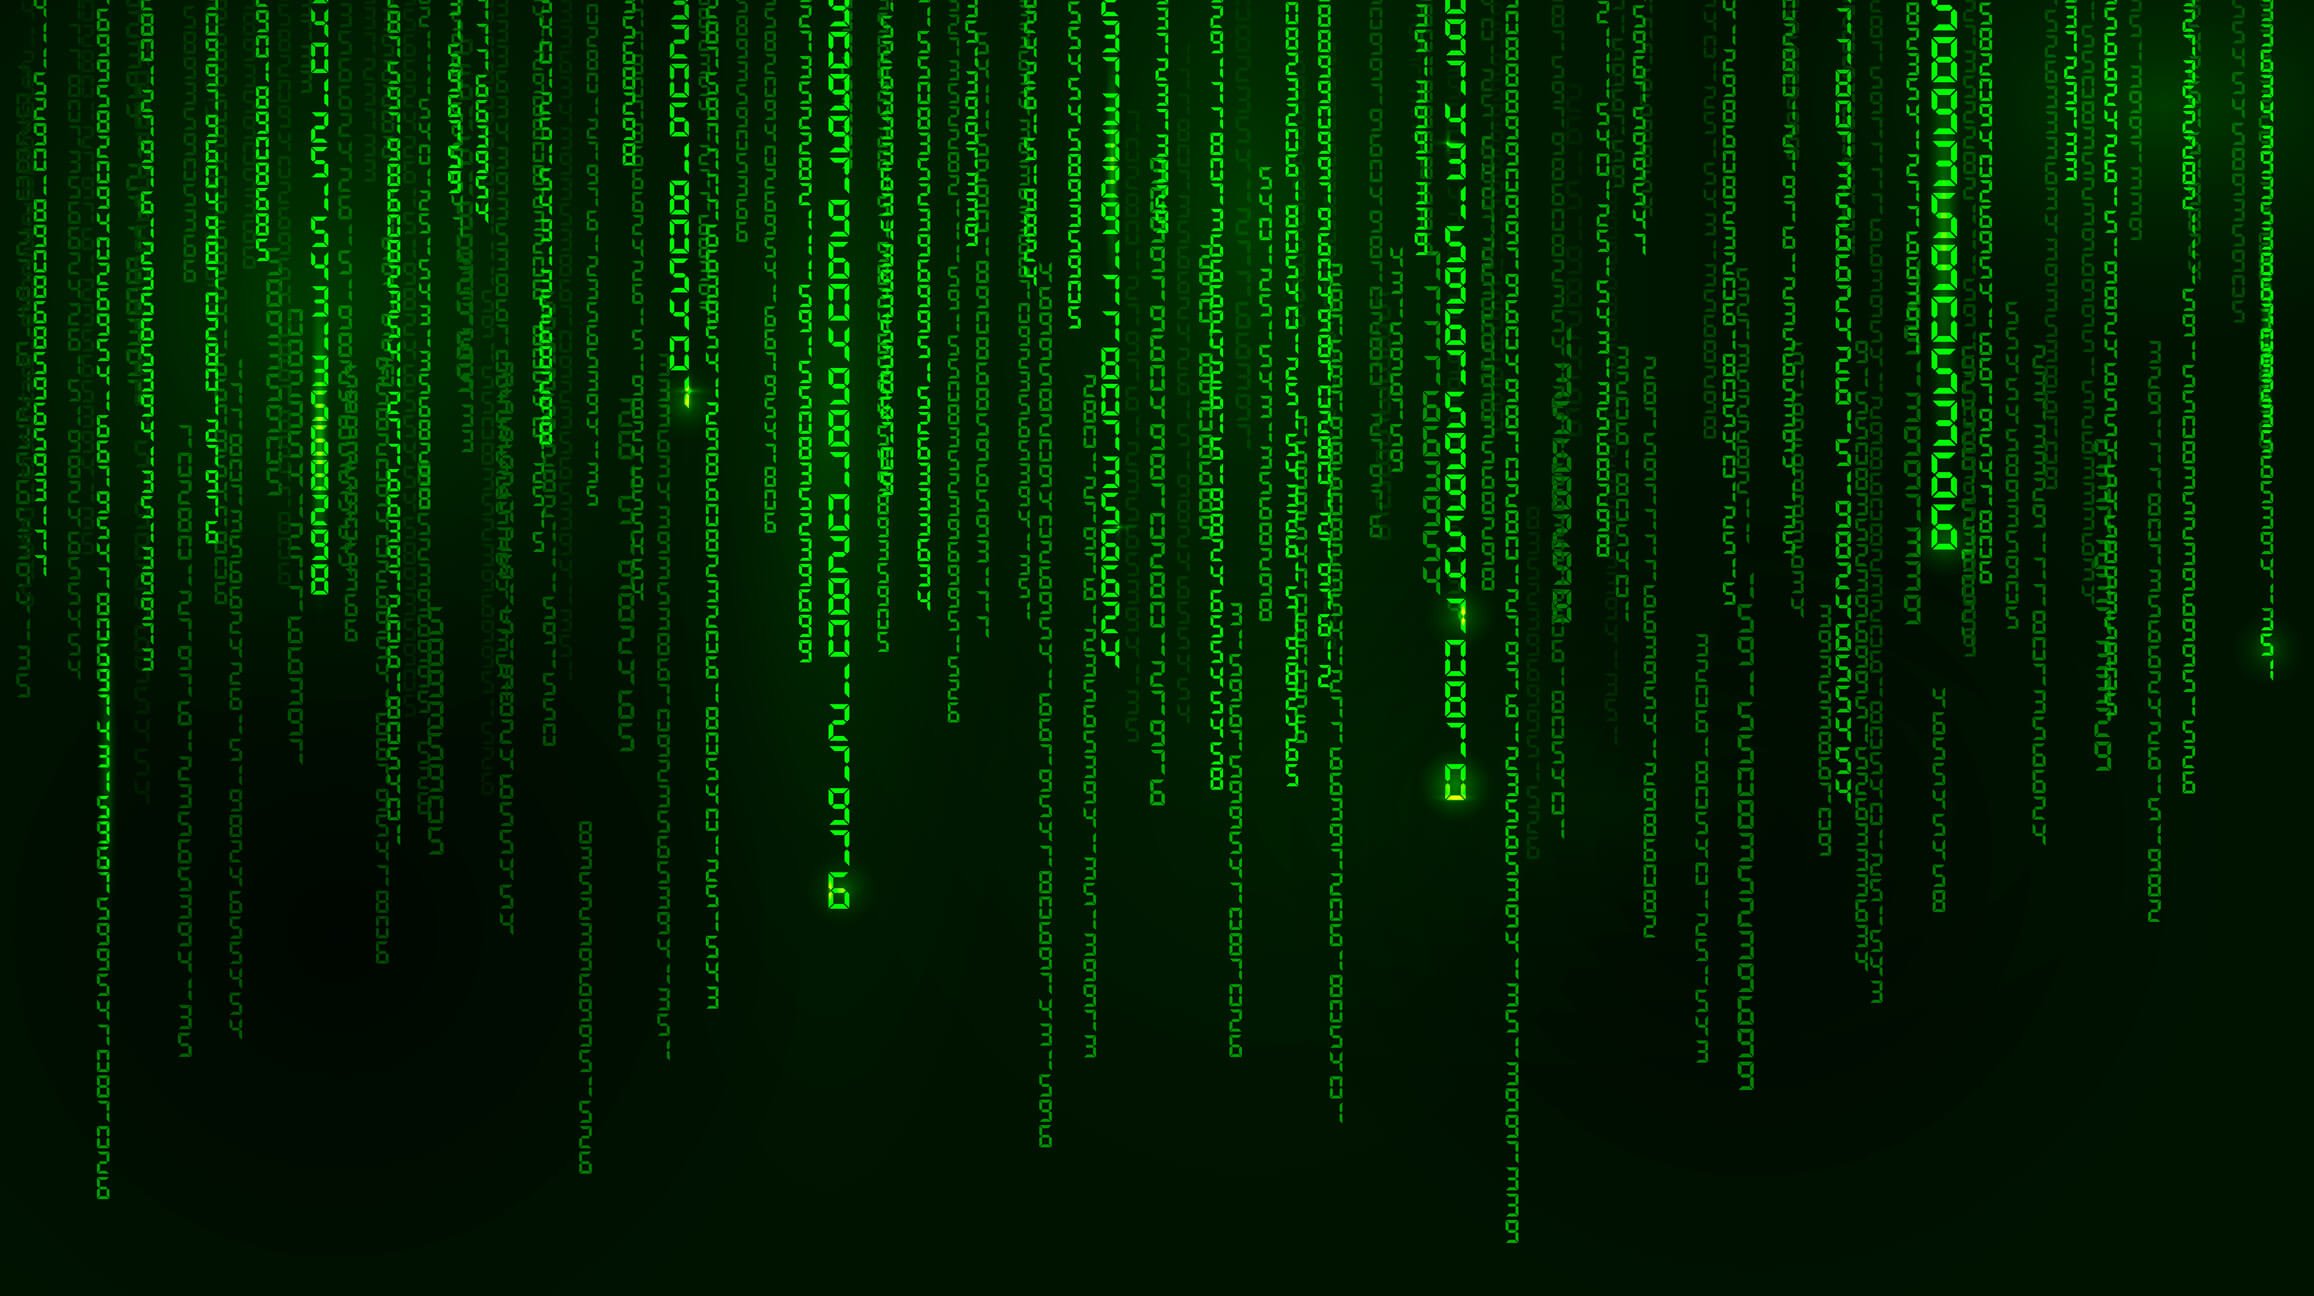 Binary code in Matrix style on green background